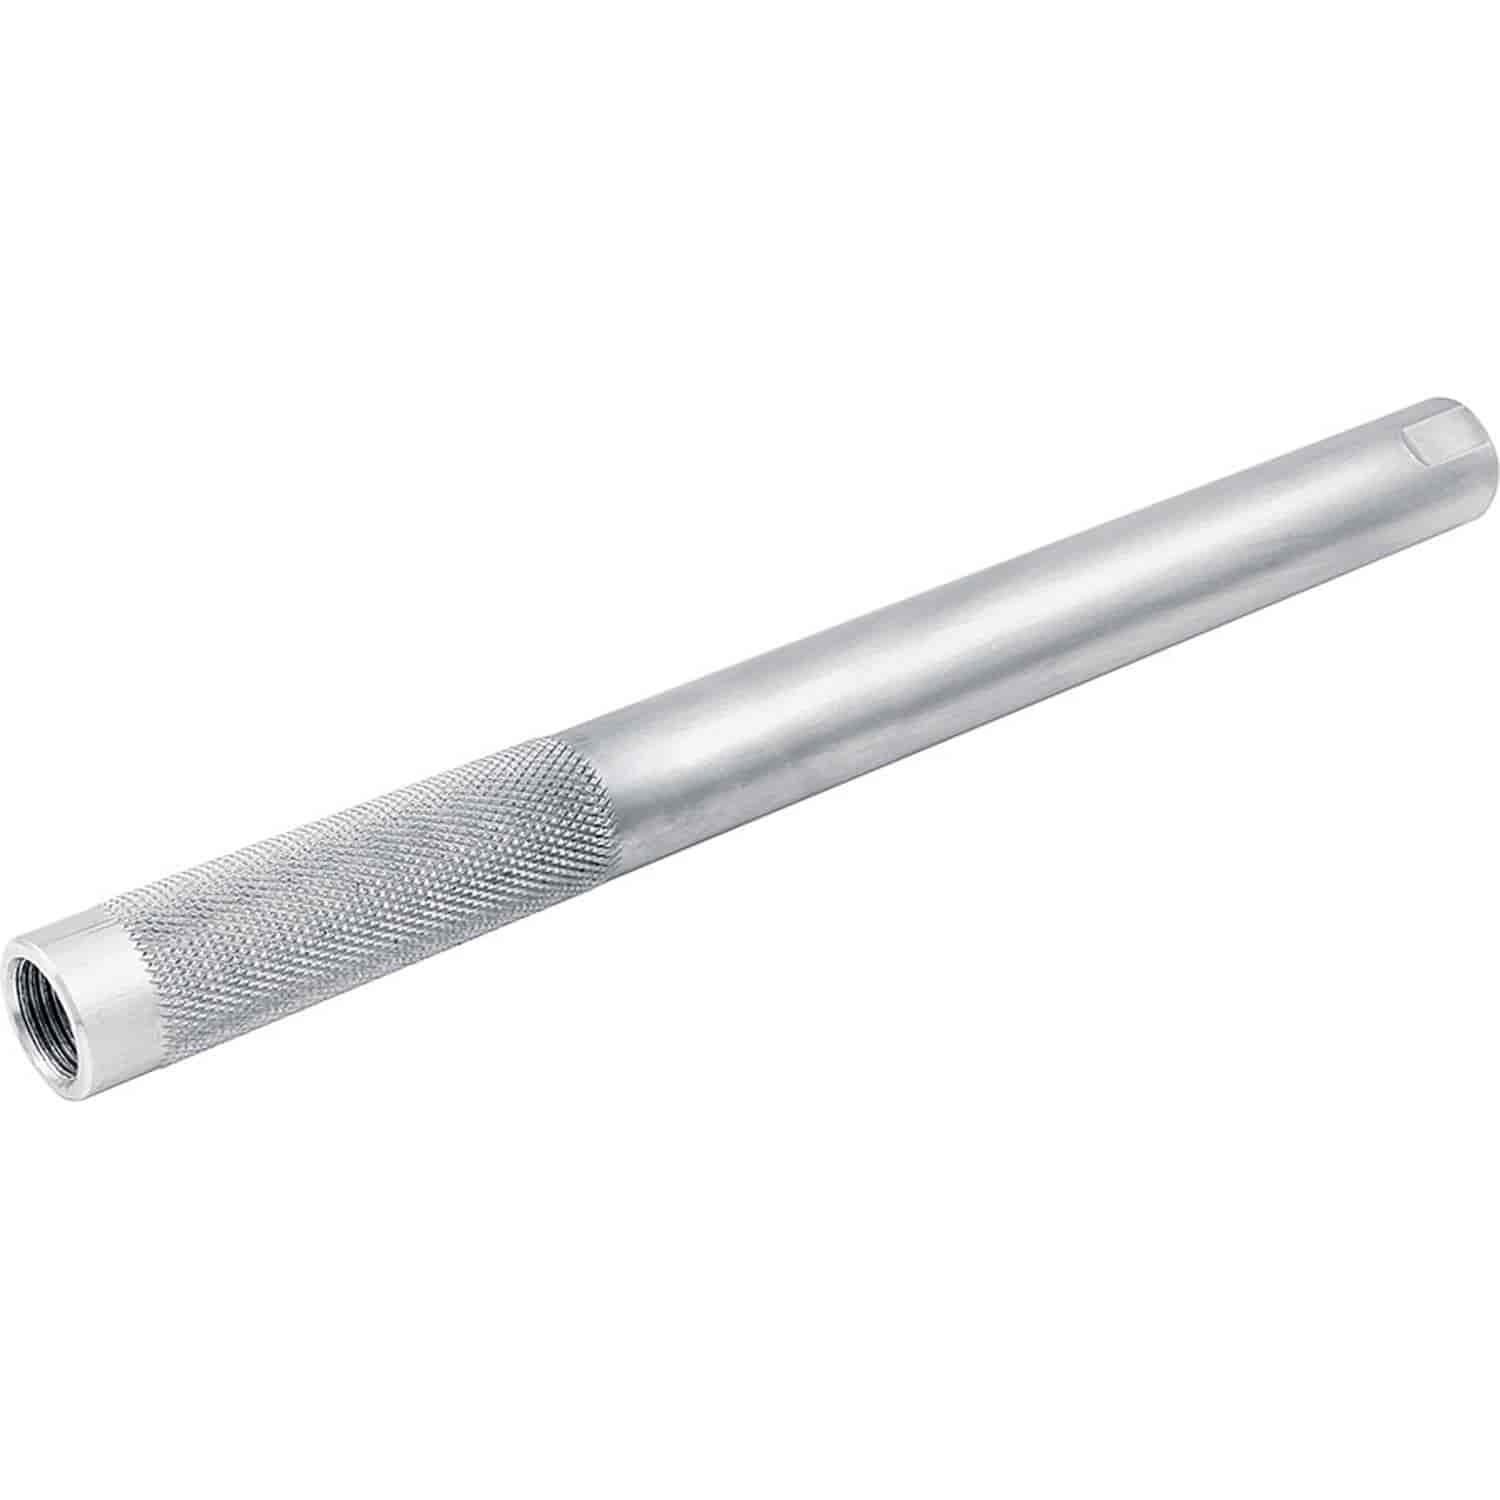 Swedged Aluminum Tie Rod Tube Length: 12"